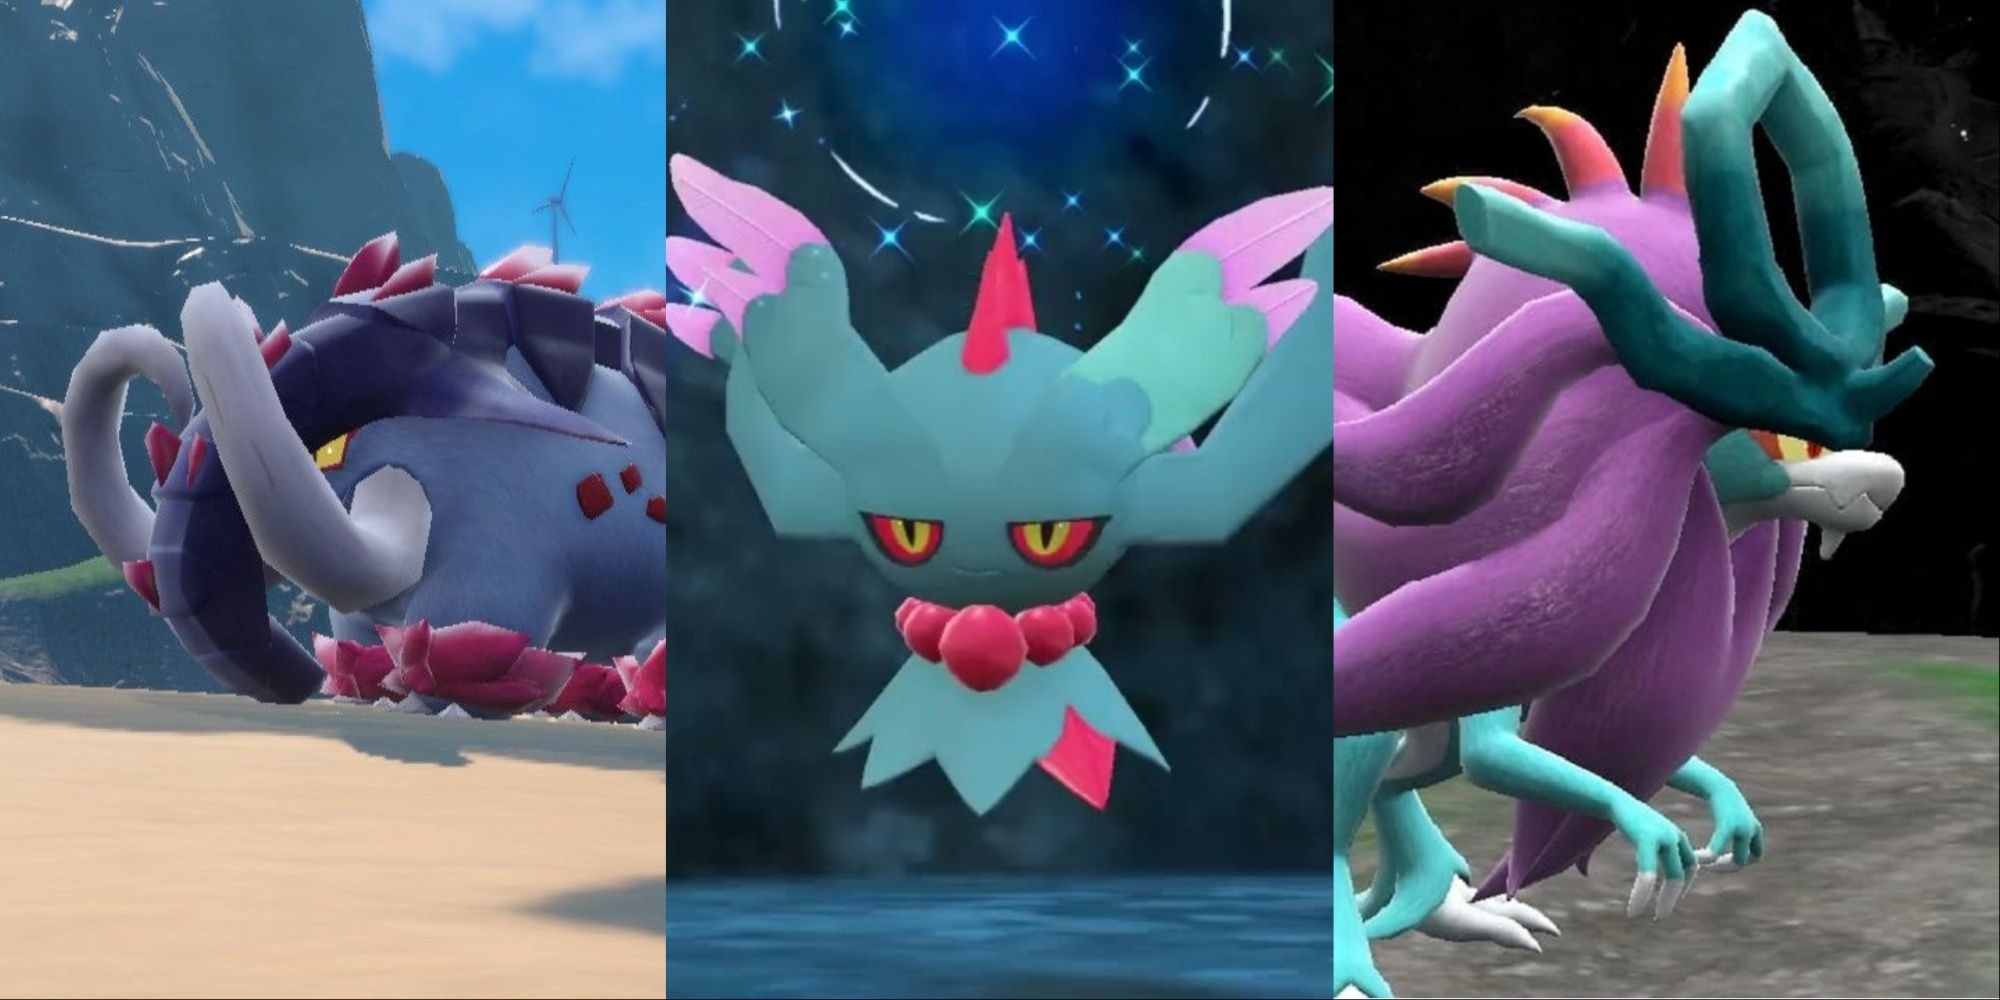 All Paradox Pokémon in Pokémon Scarlet & Violet